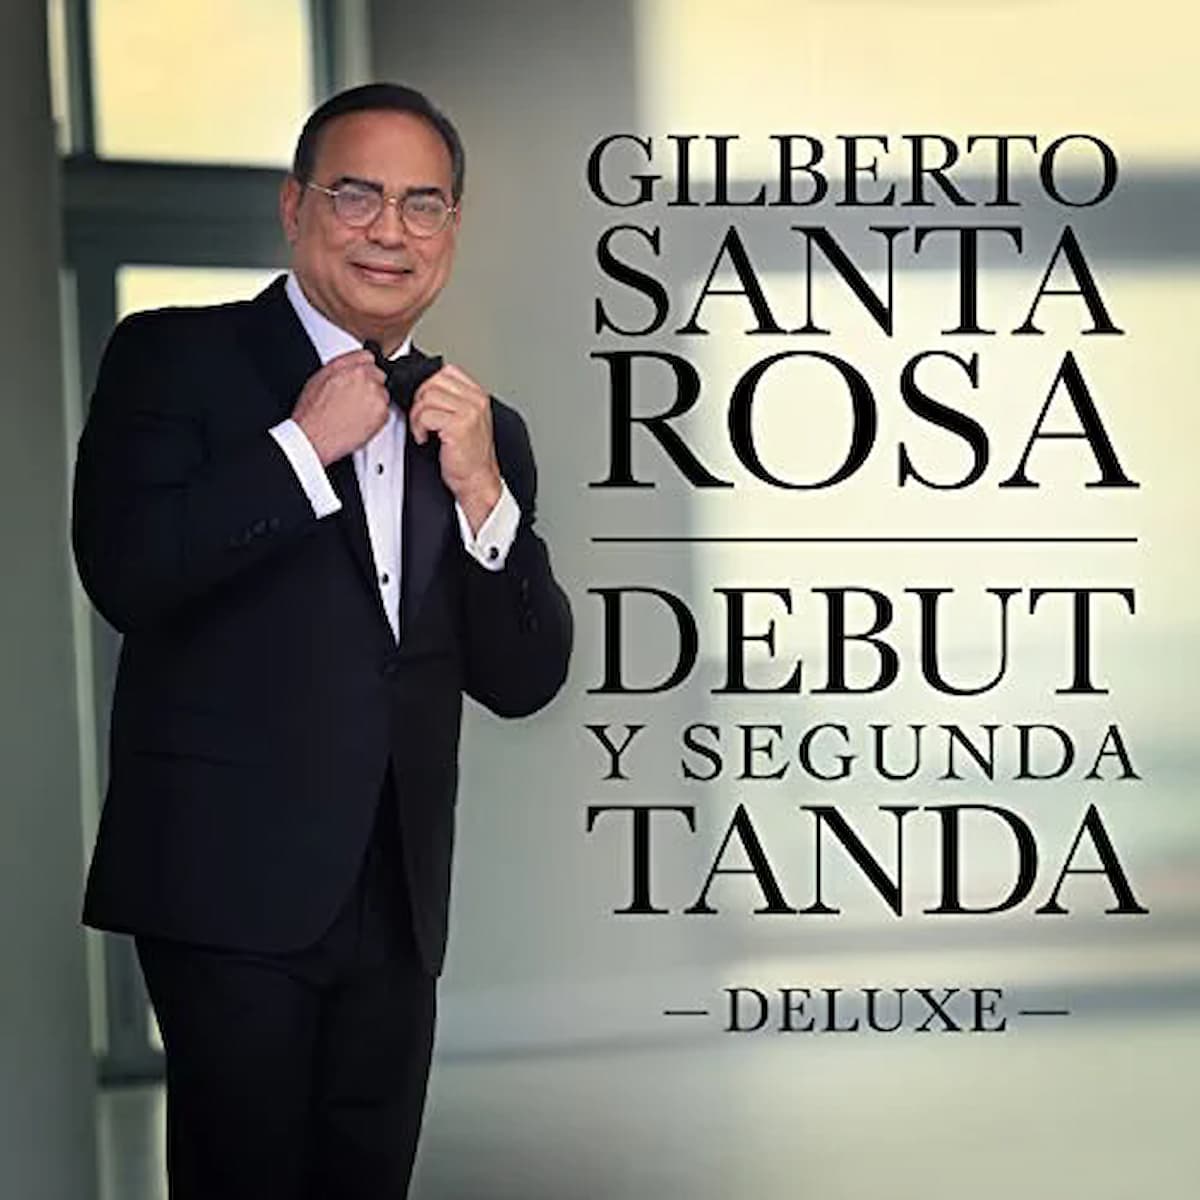 Gilberto Santa Rosa “Debut y Segunda Tanda” (Deluxe)